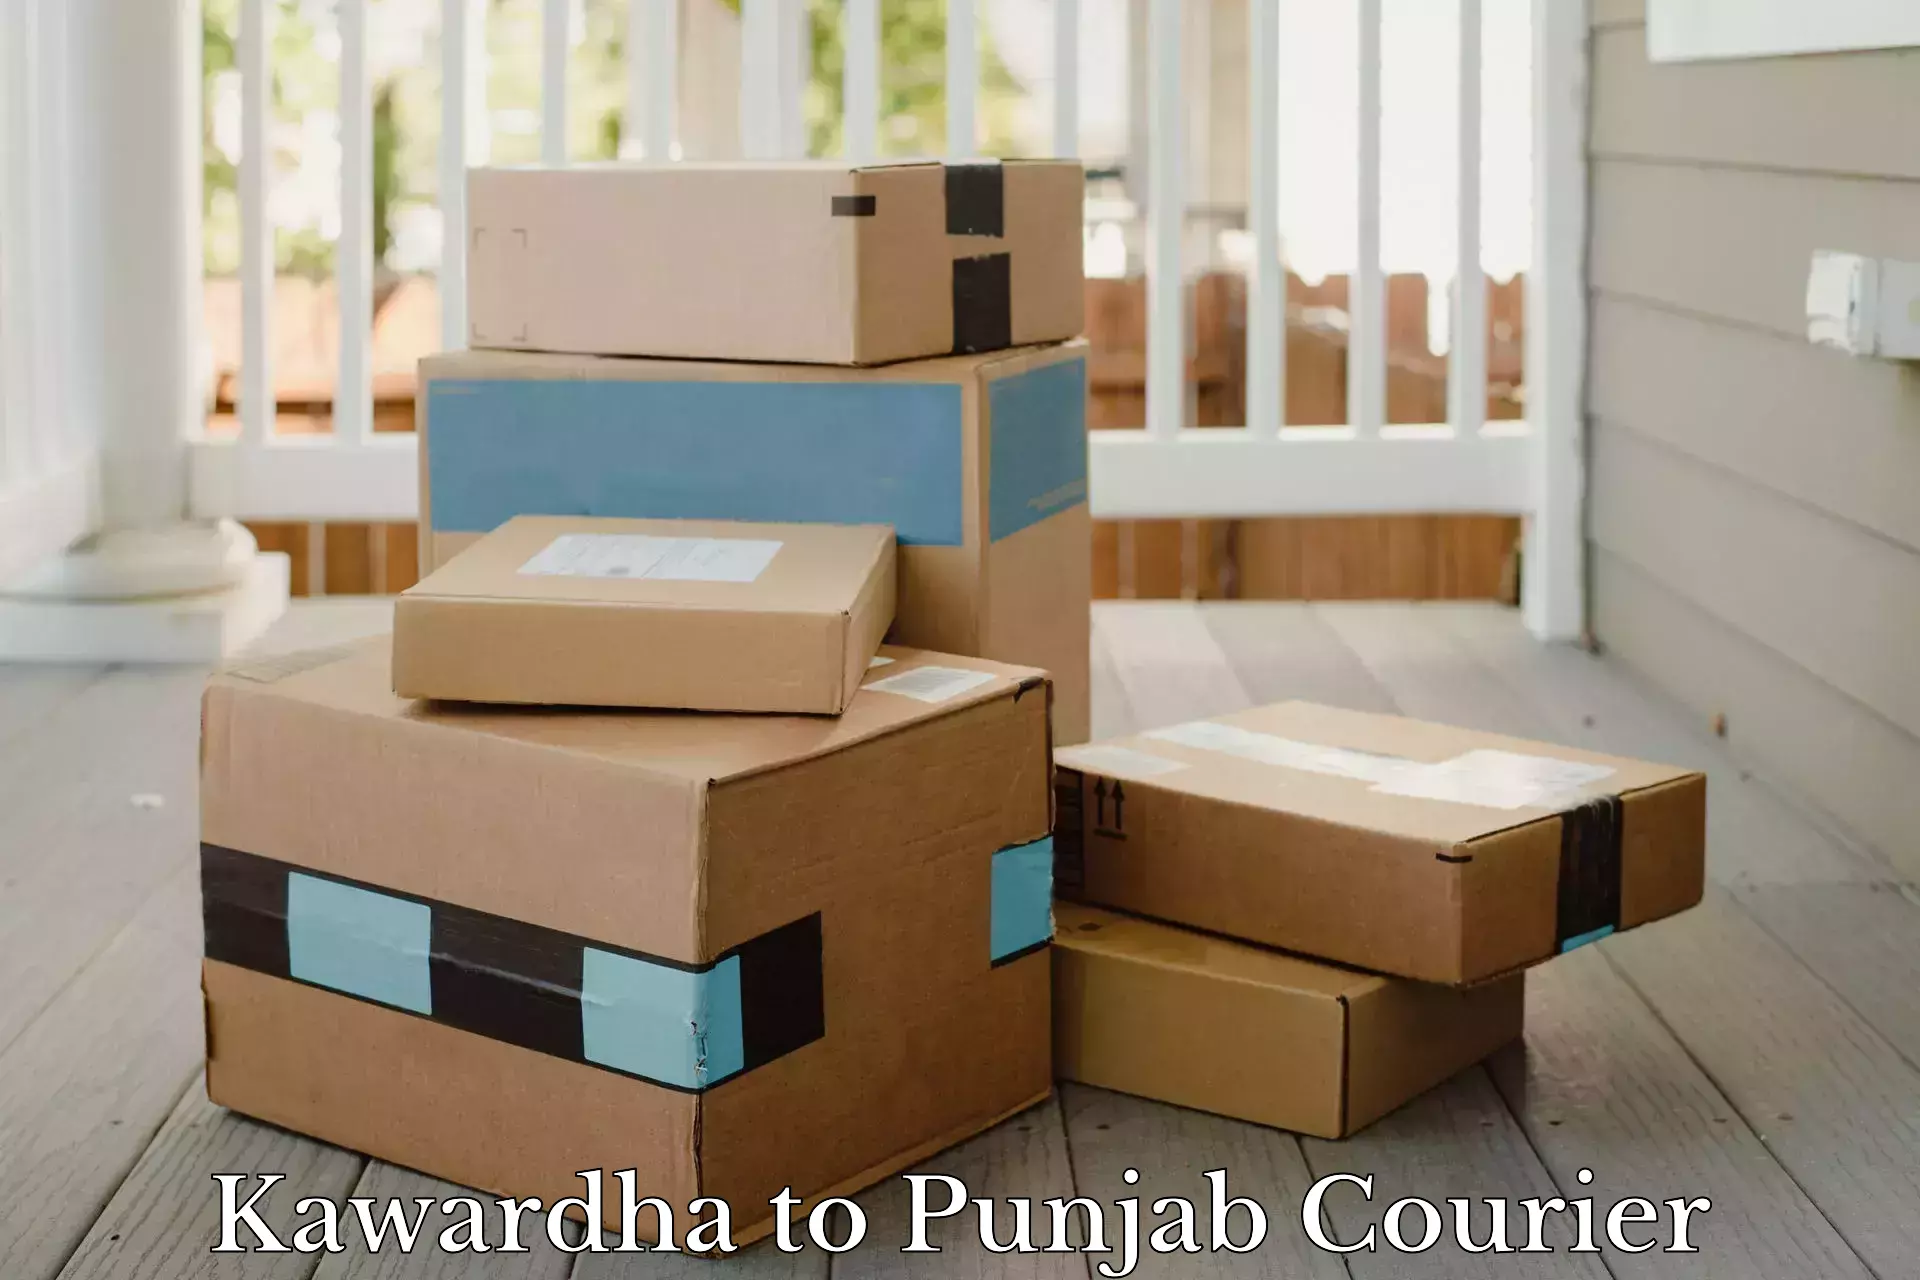 Courier service comparison Kawardha to Kapurthala